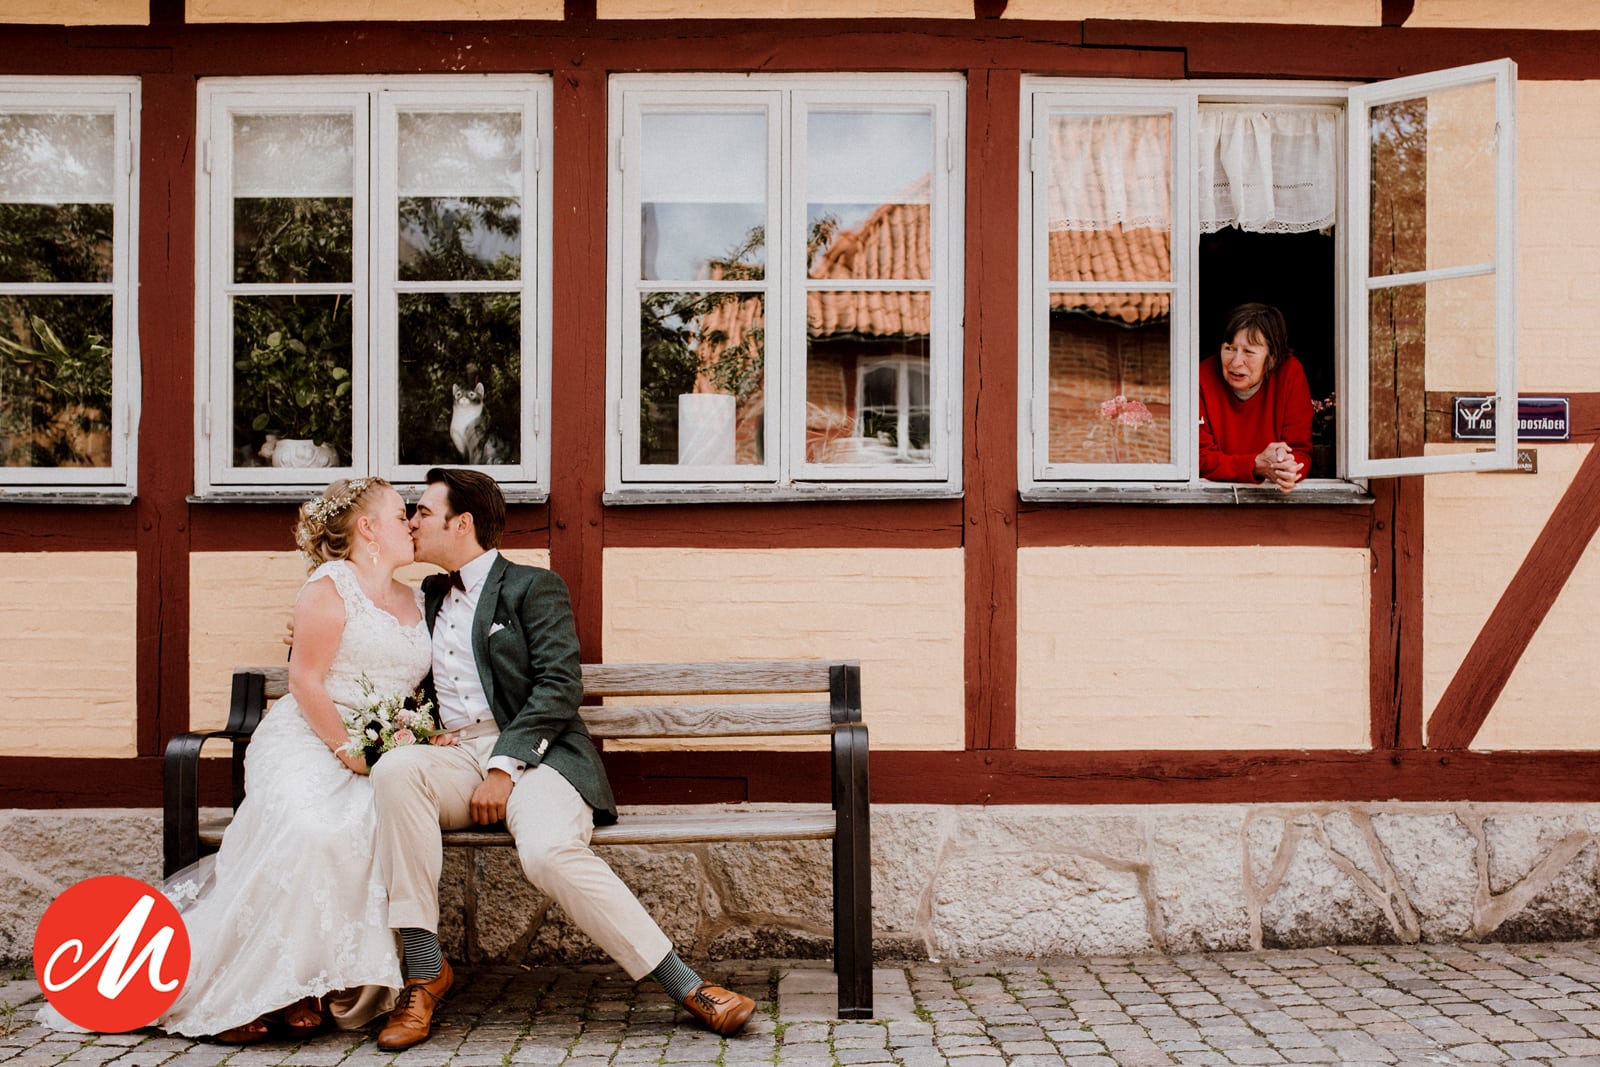 Award winning twee bruidsfotograaf in Zweden